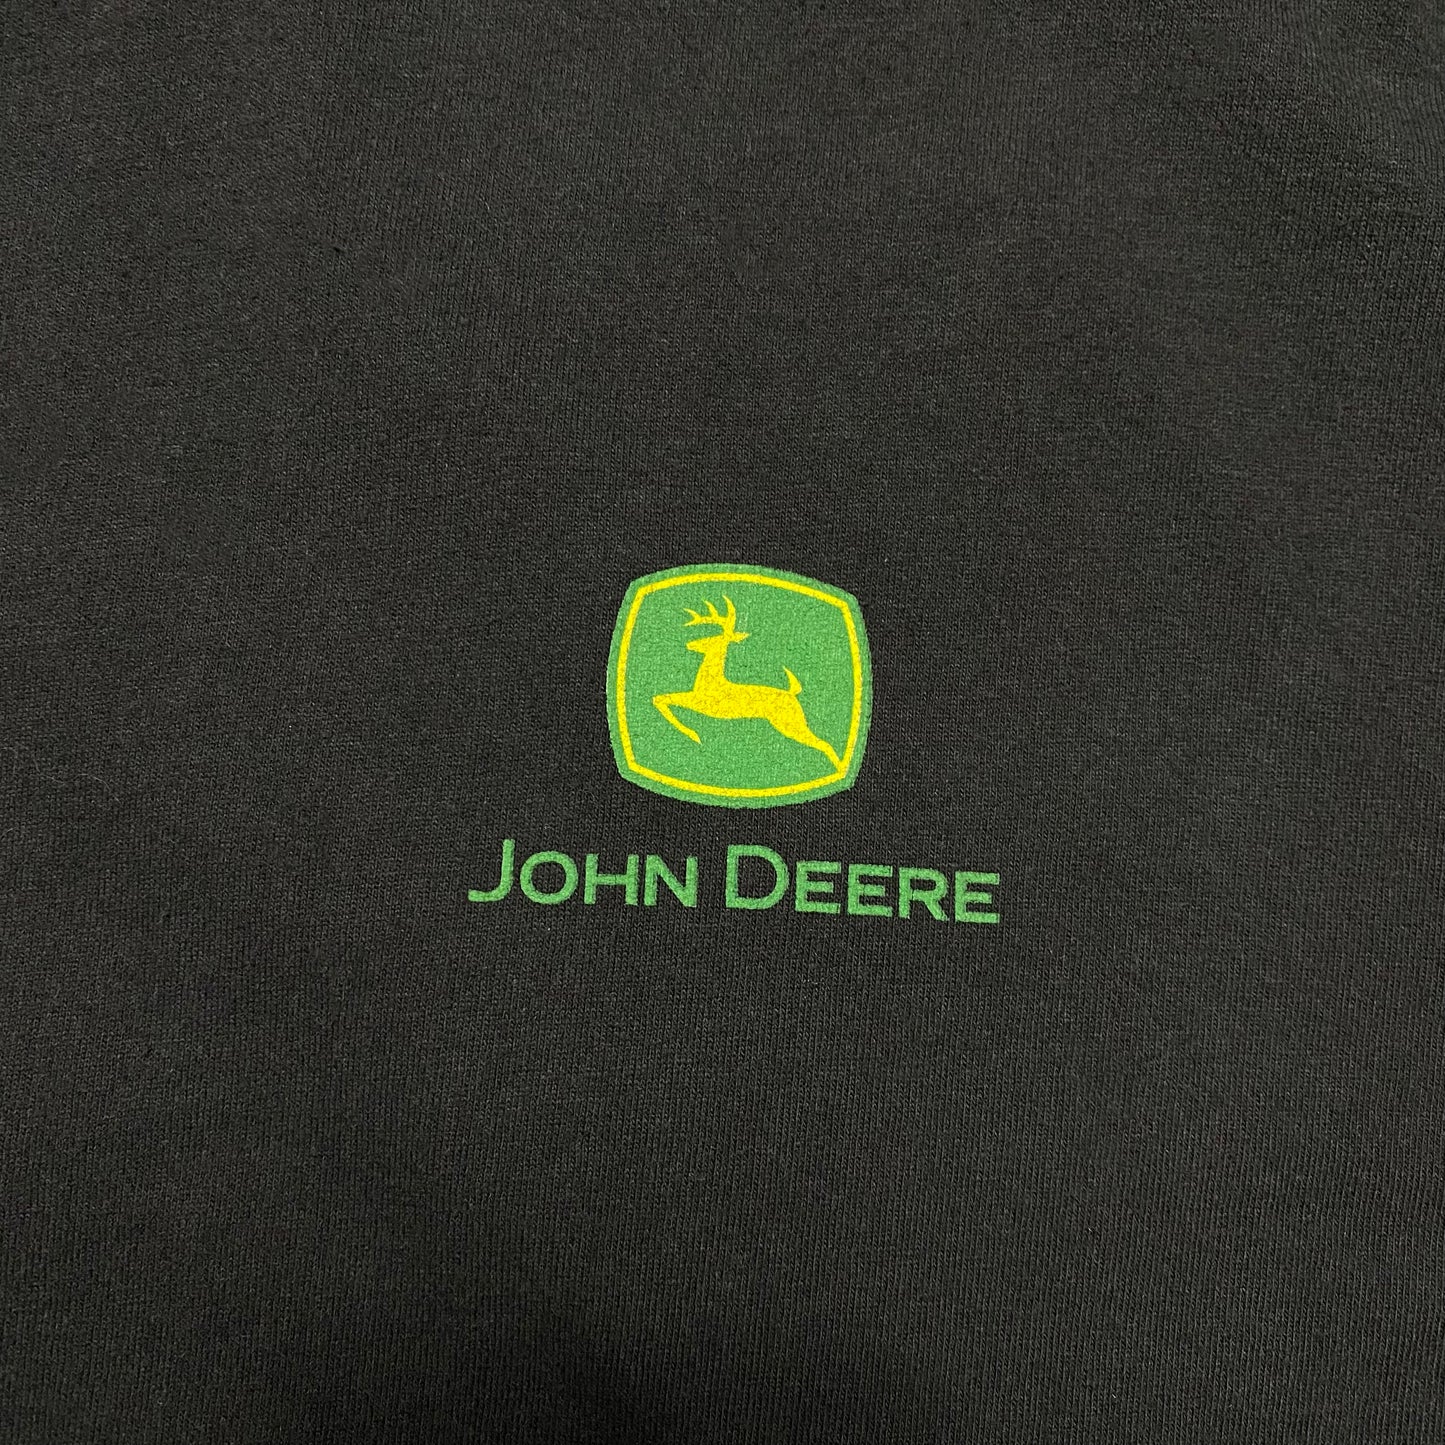 90's "JOHN DEERE" AD T-SHIRT